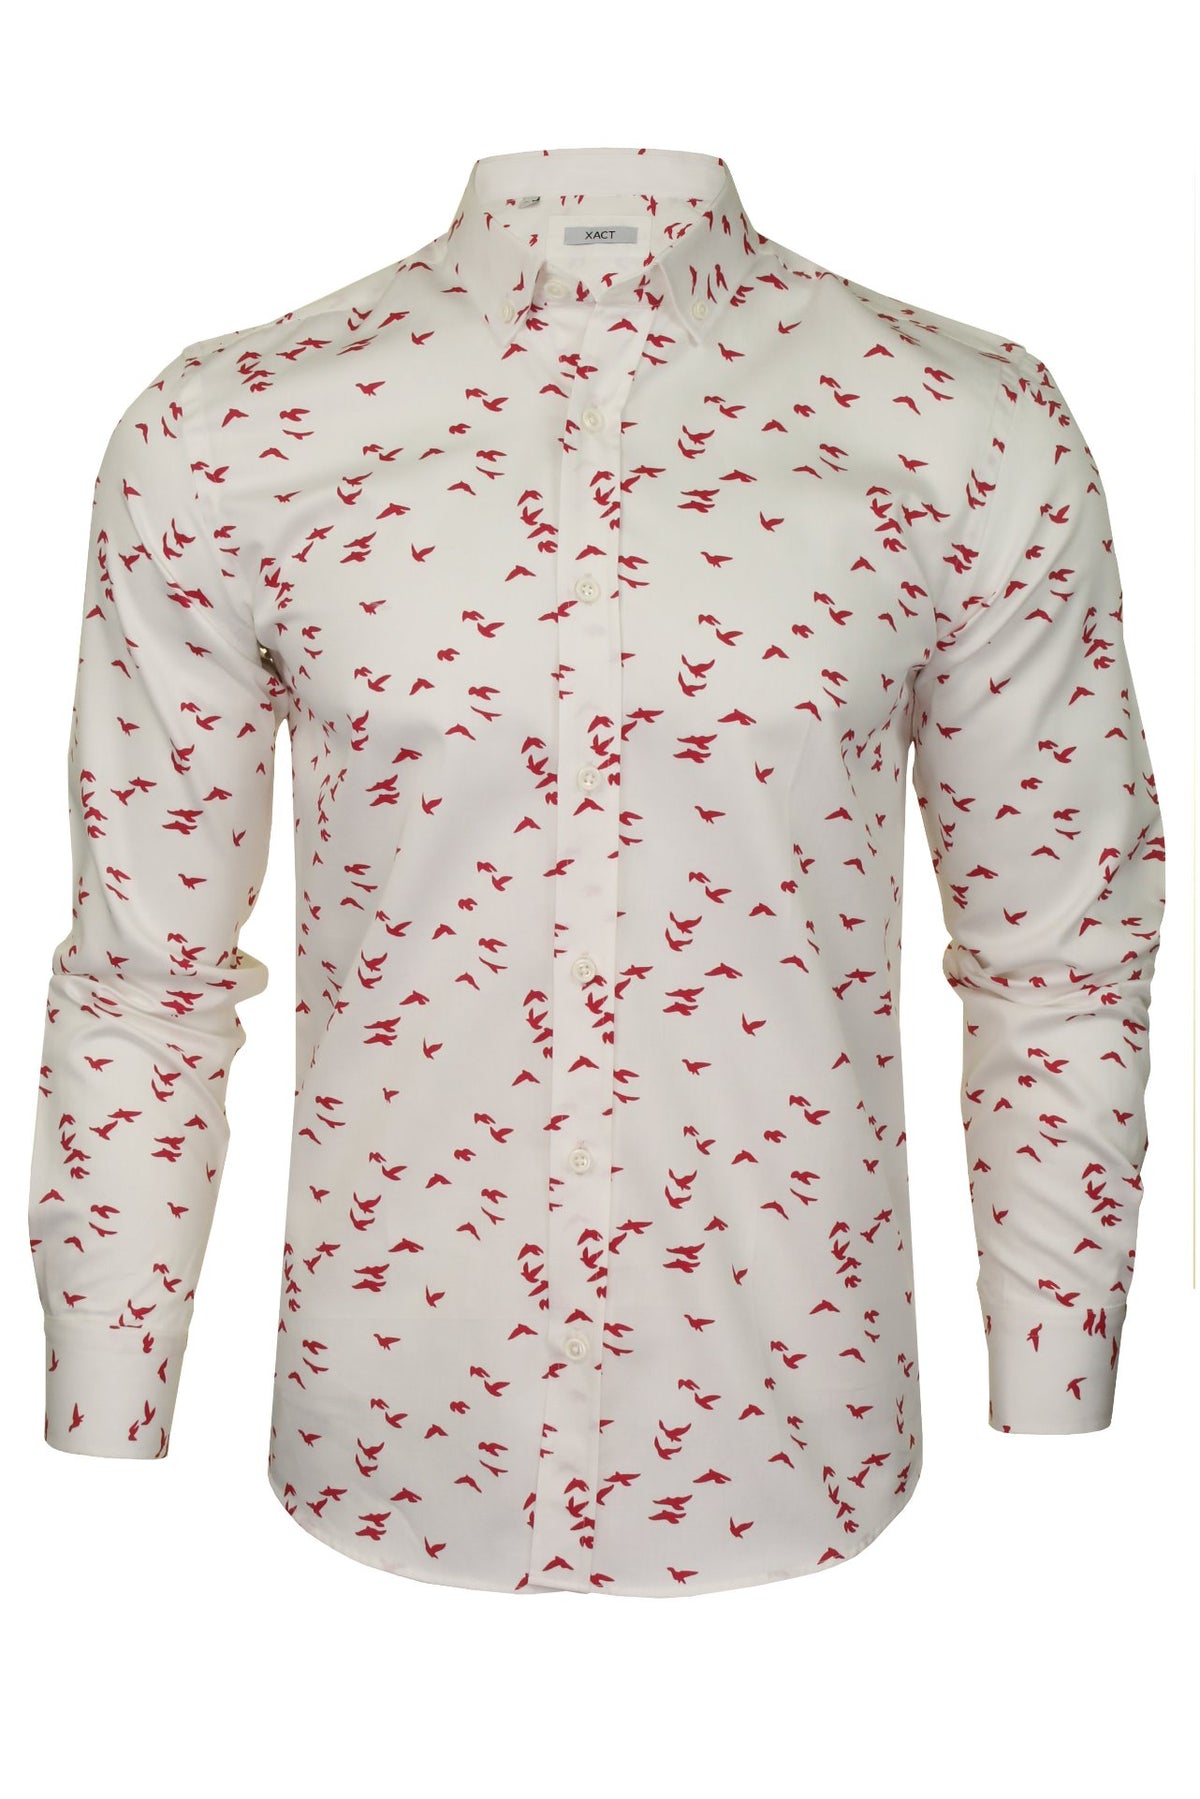 Xact Men's Cotton Bird Print Long Sleeved Shirt, 01, Xsh1083, White